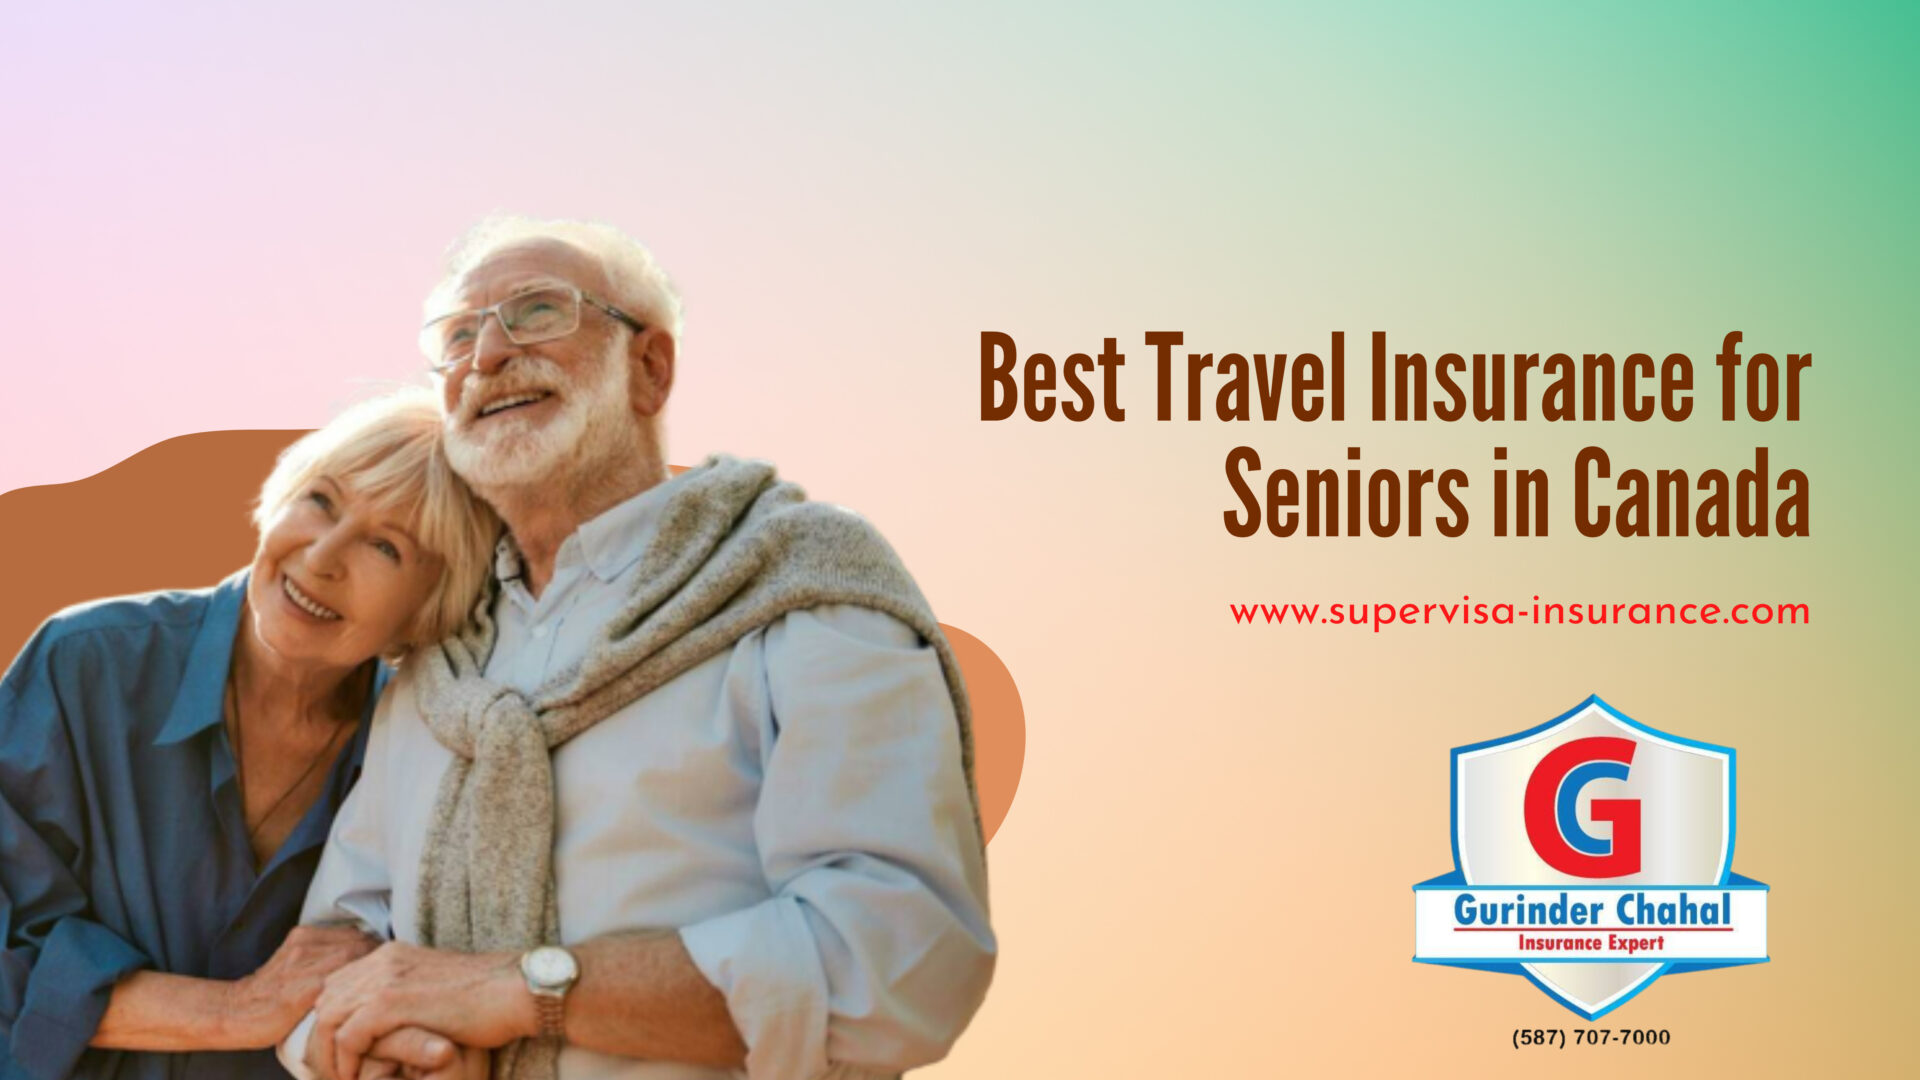 Travel Insurance for Seniors in Canada